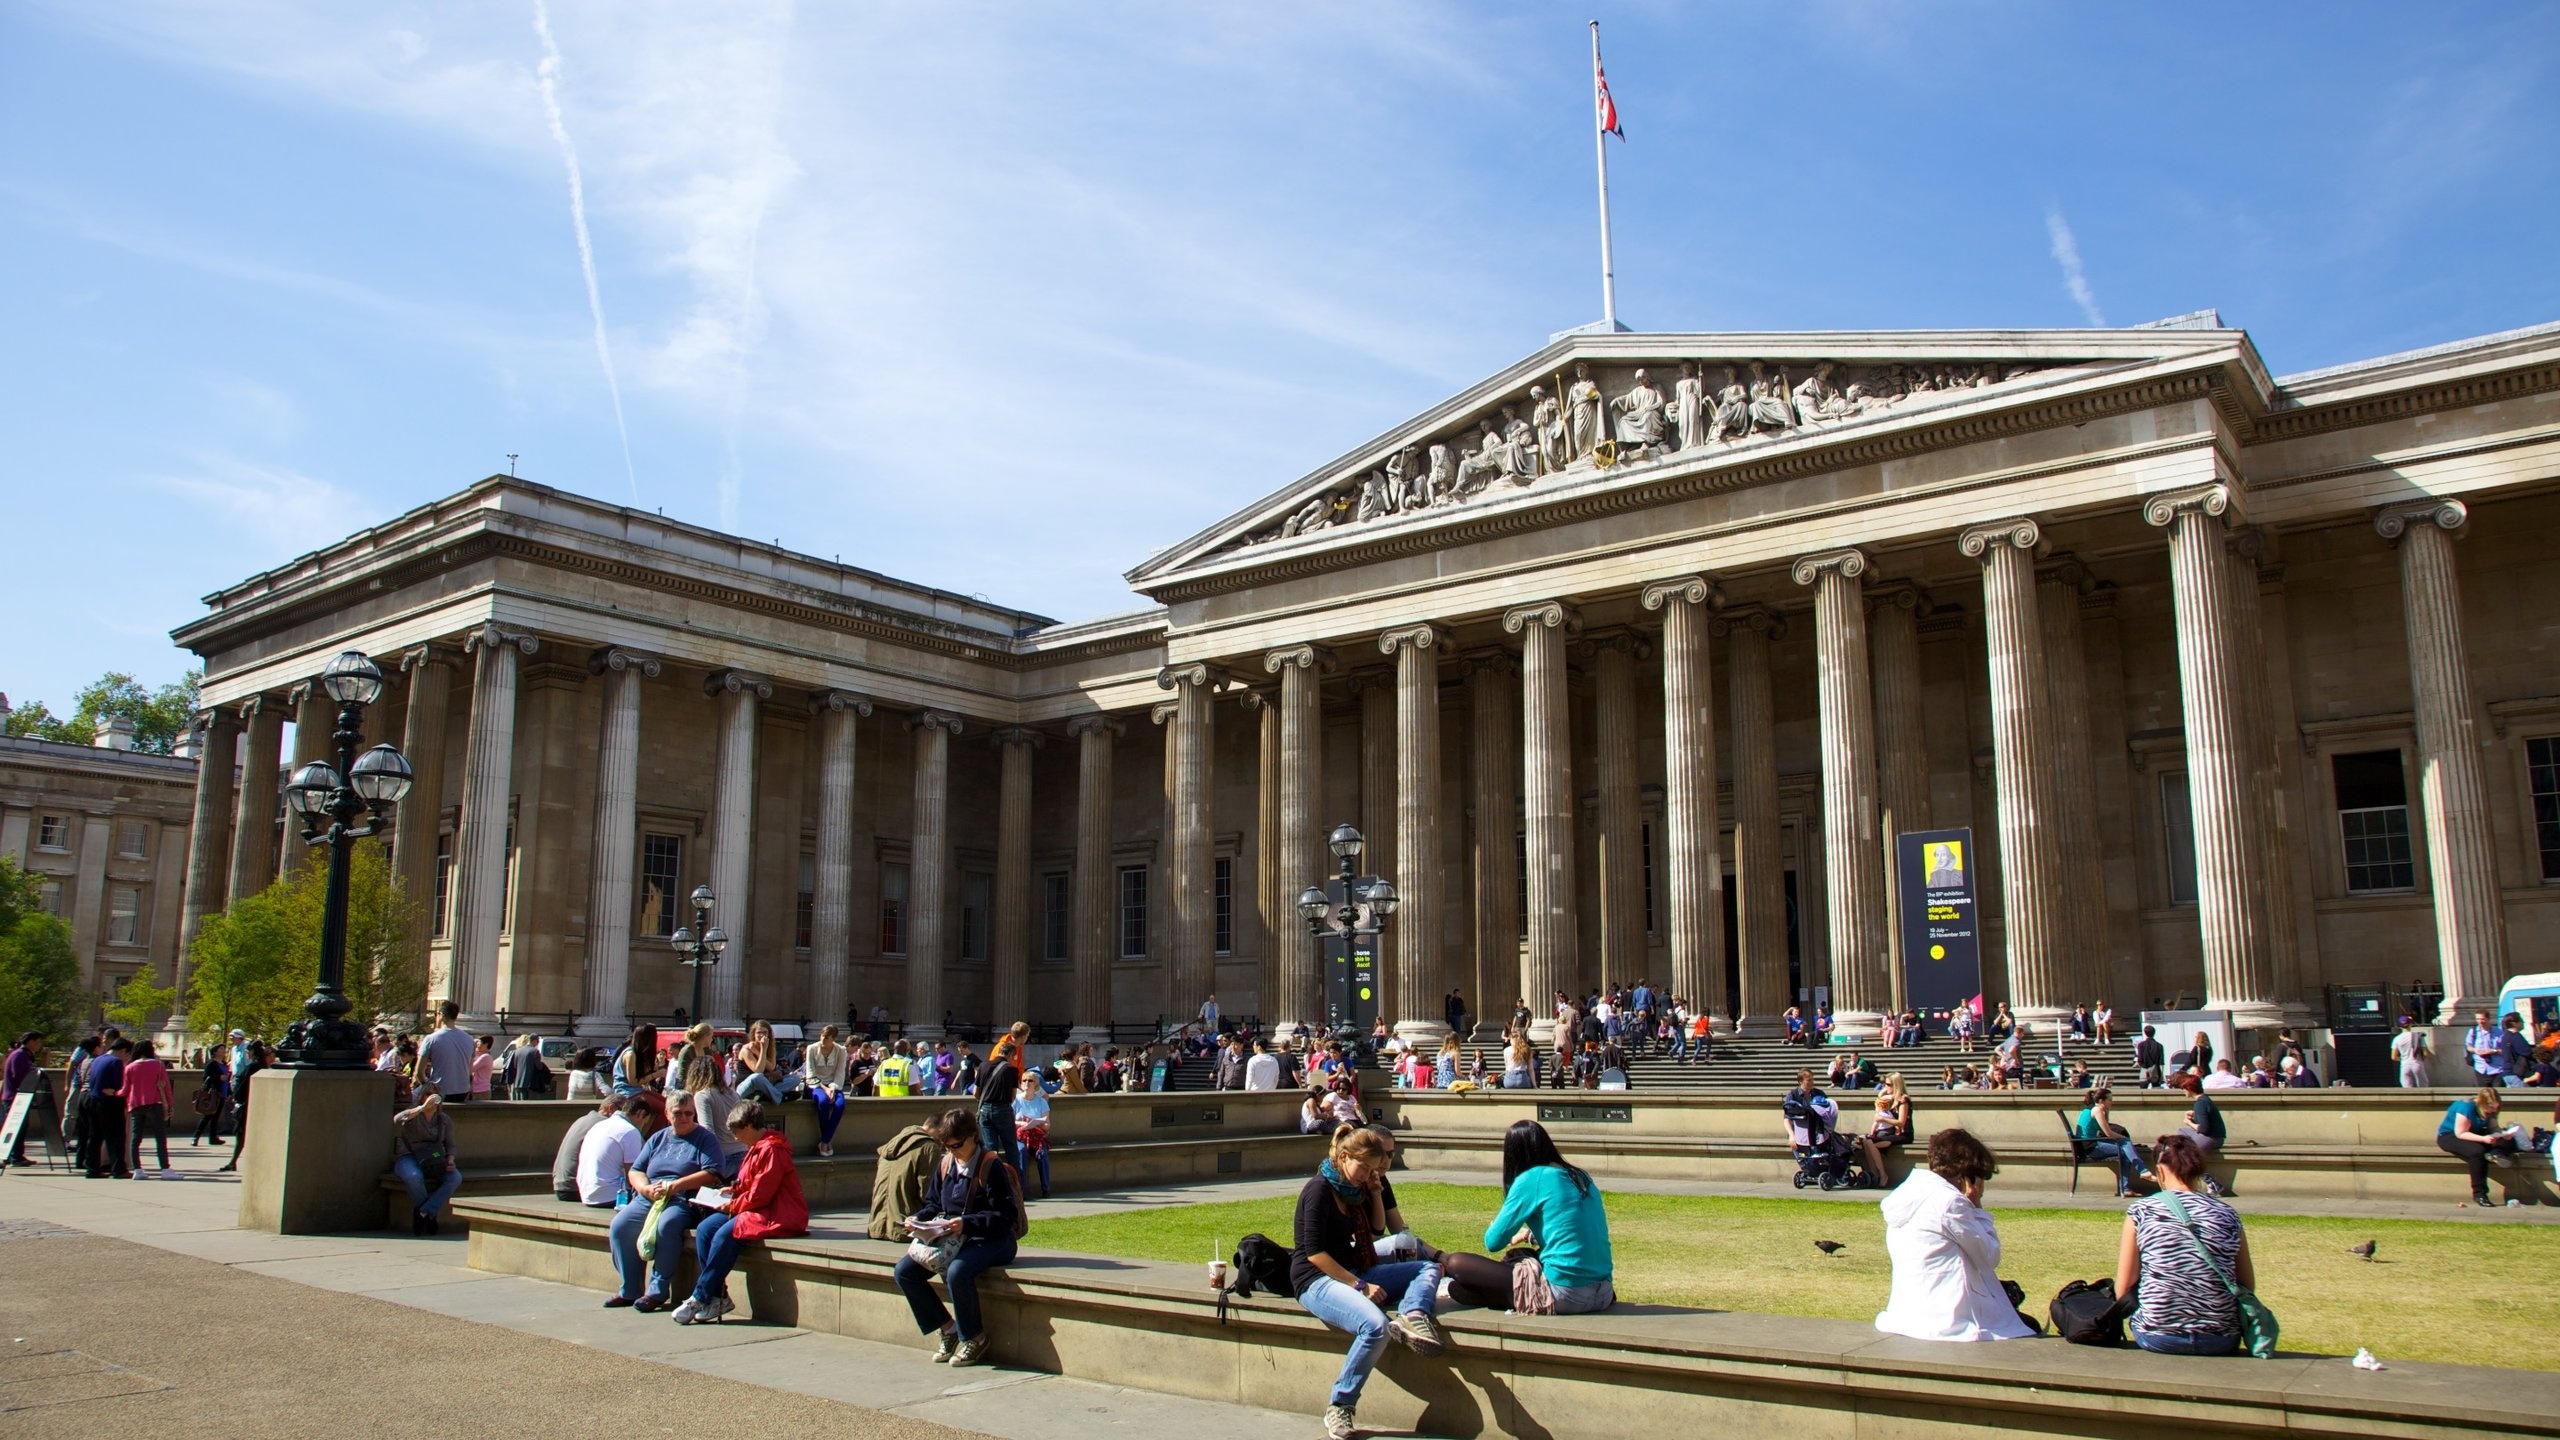 British Museum, London vacation rentals, Unique accommodations, VRBO, 2560x1440 HD Desktop